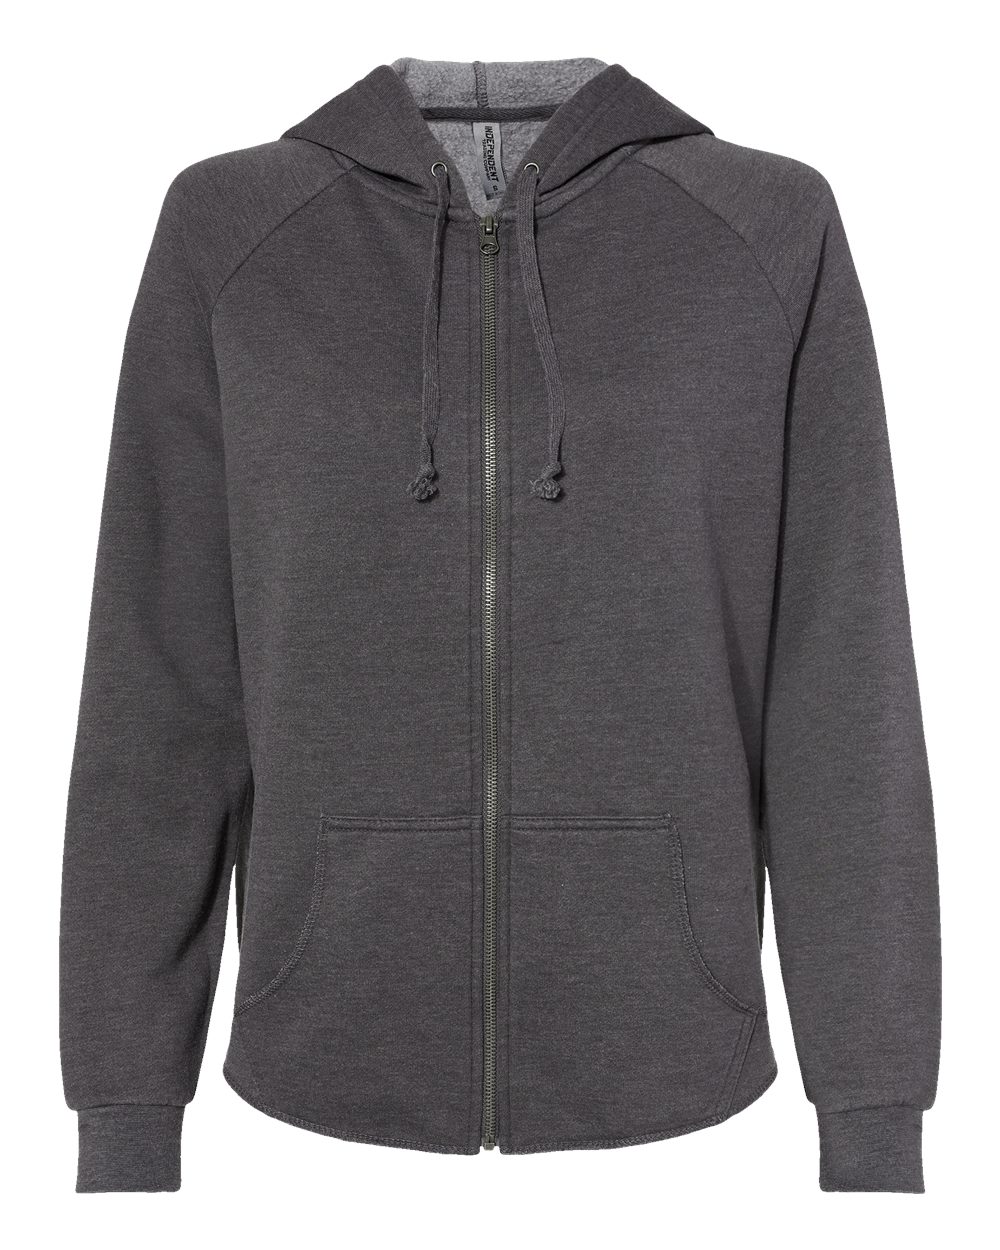 Independent Trading Co. - Women's California Wave Wash Full-Zip Hooded Sweatshirt